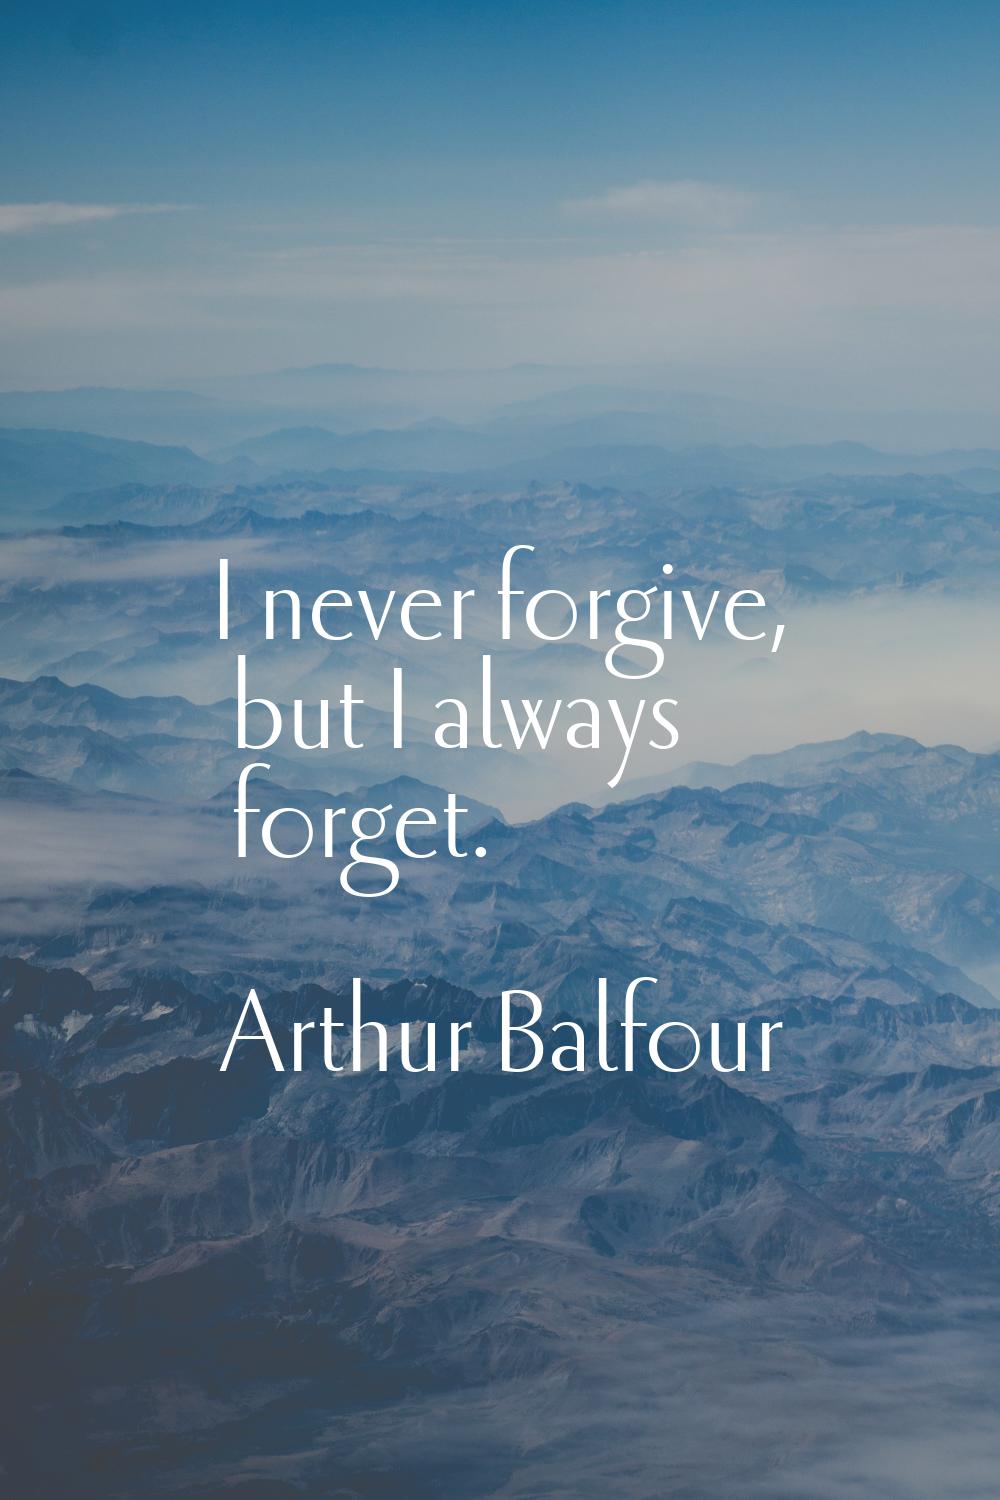 I never forgive, but I always forget.